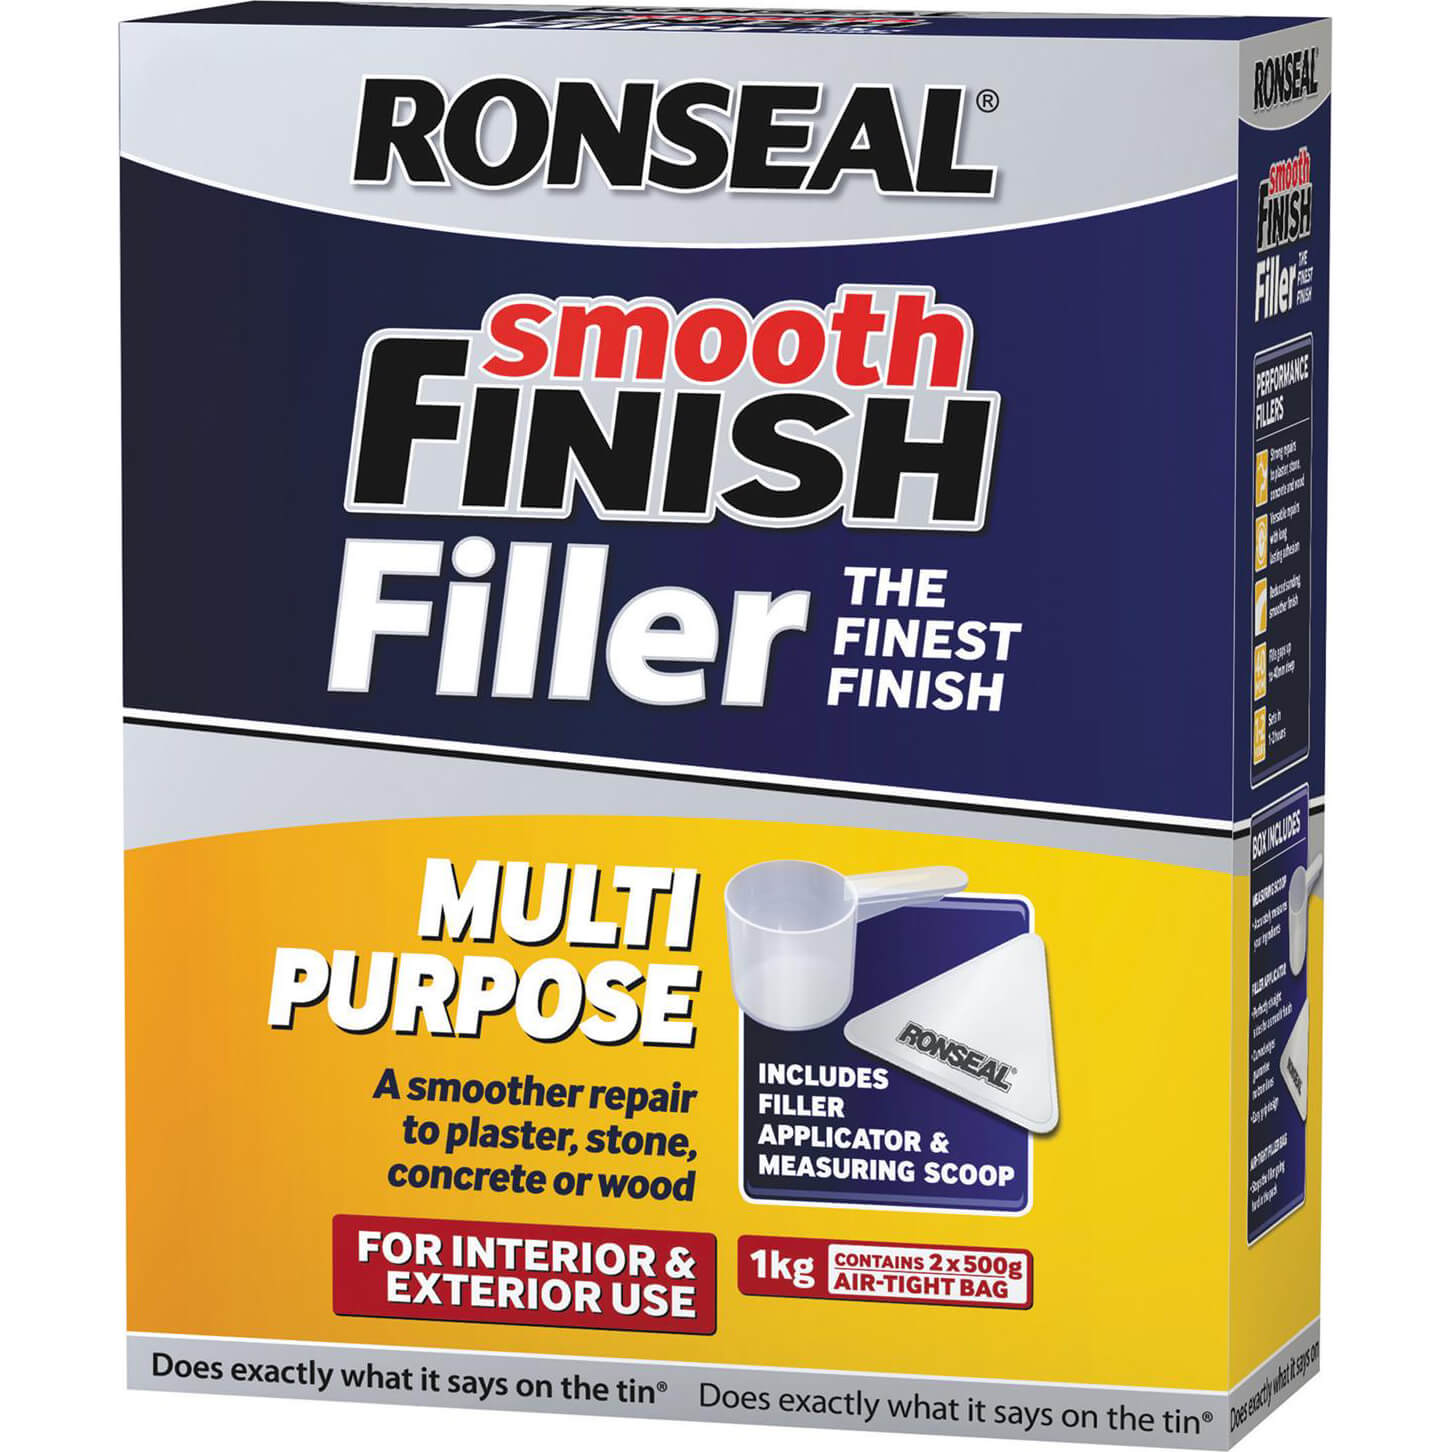 Image of Ronseal Smooth Finish Multi Purpose Interior Wall Powder Filler 1kg